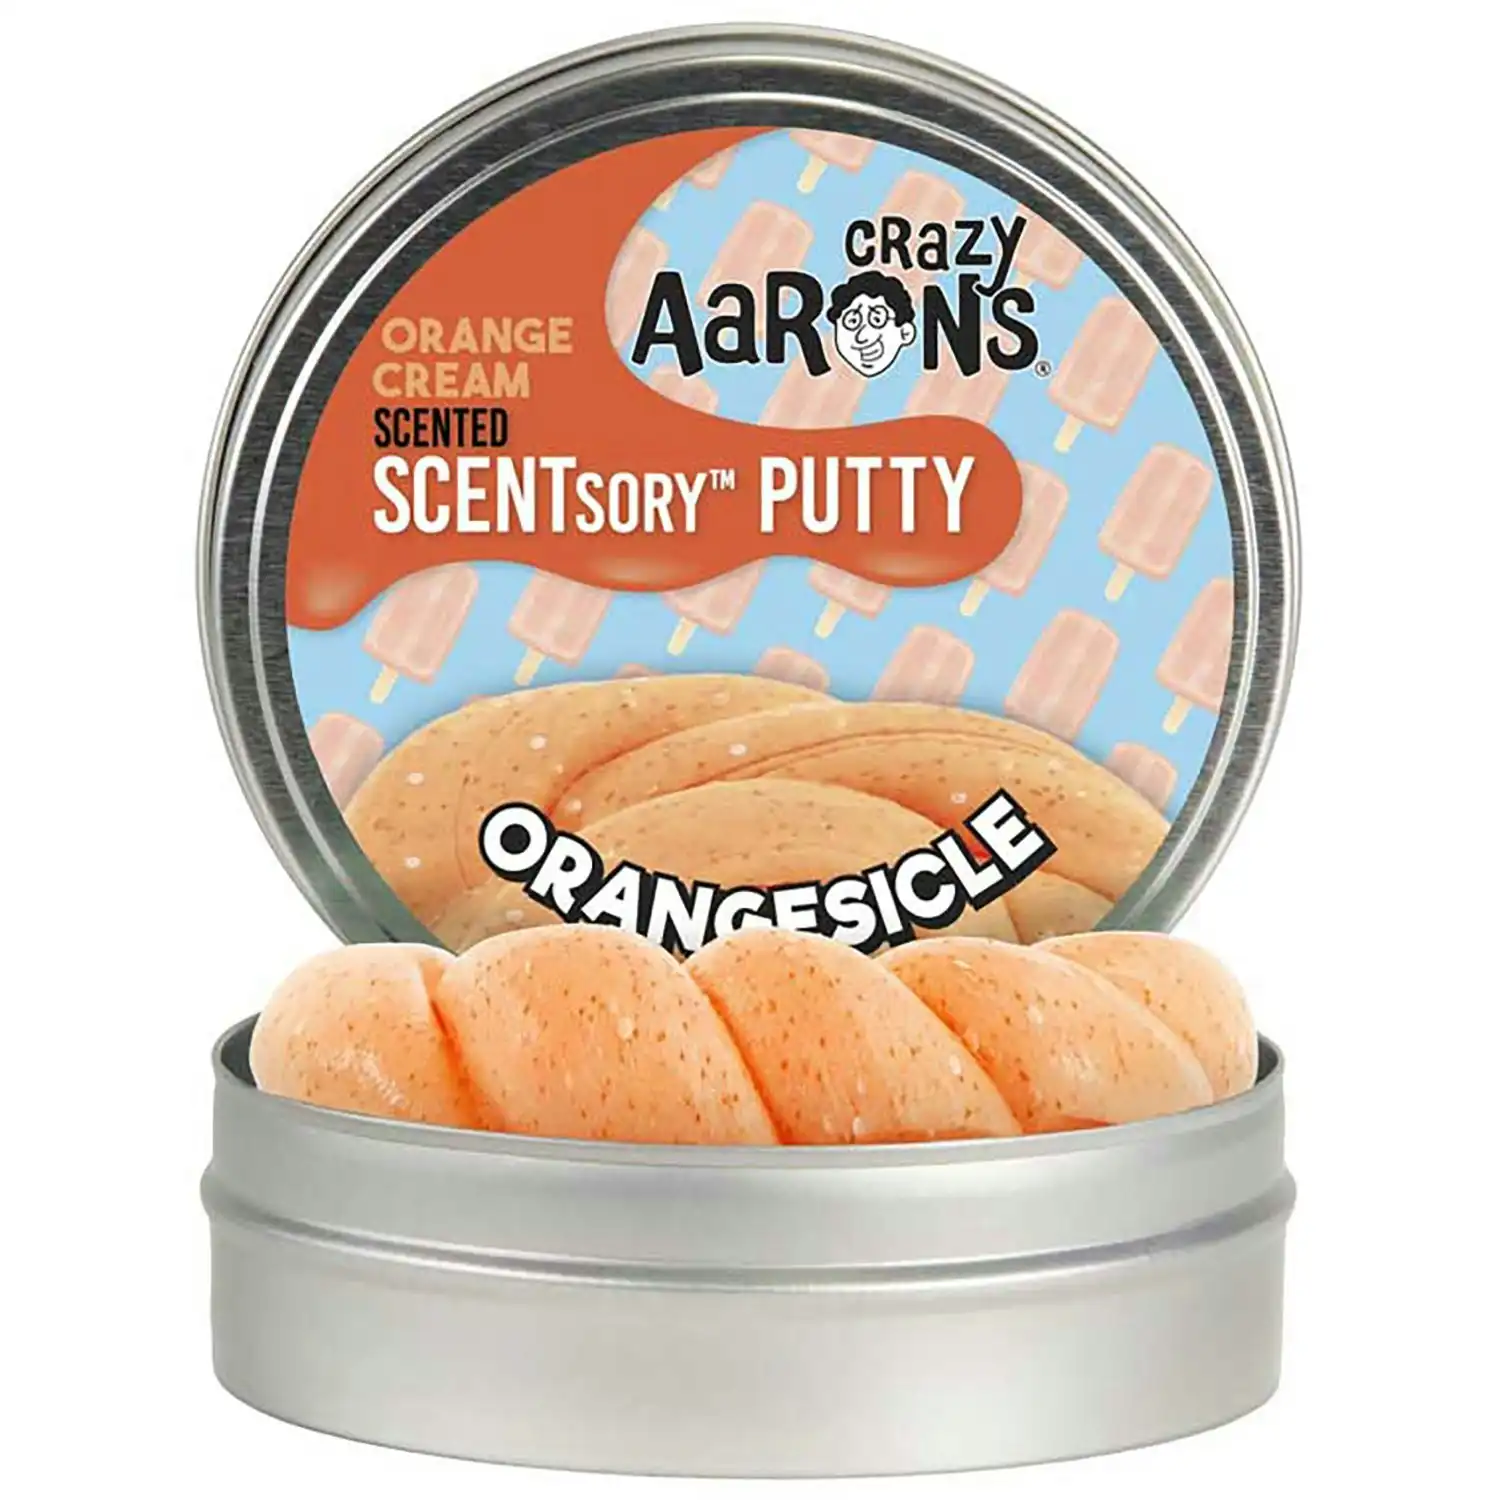 Aaron's Putty Orangesicle - Scentsory